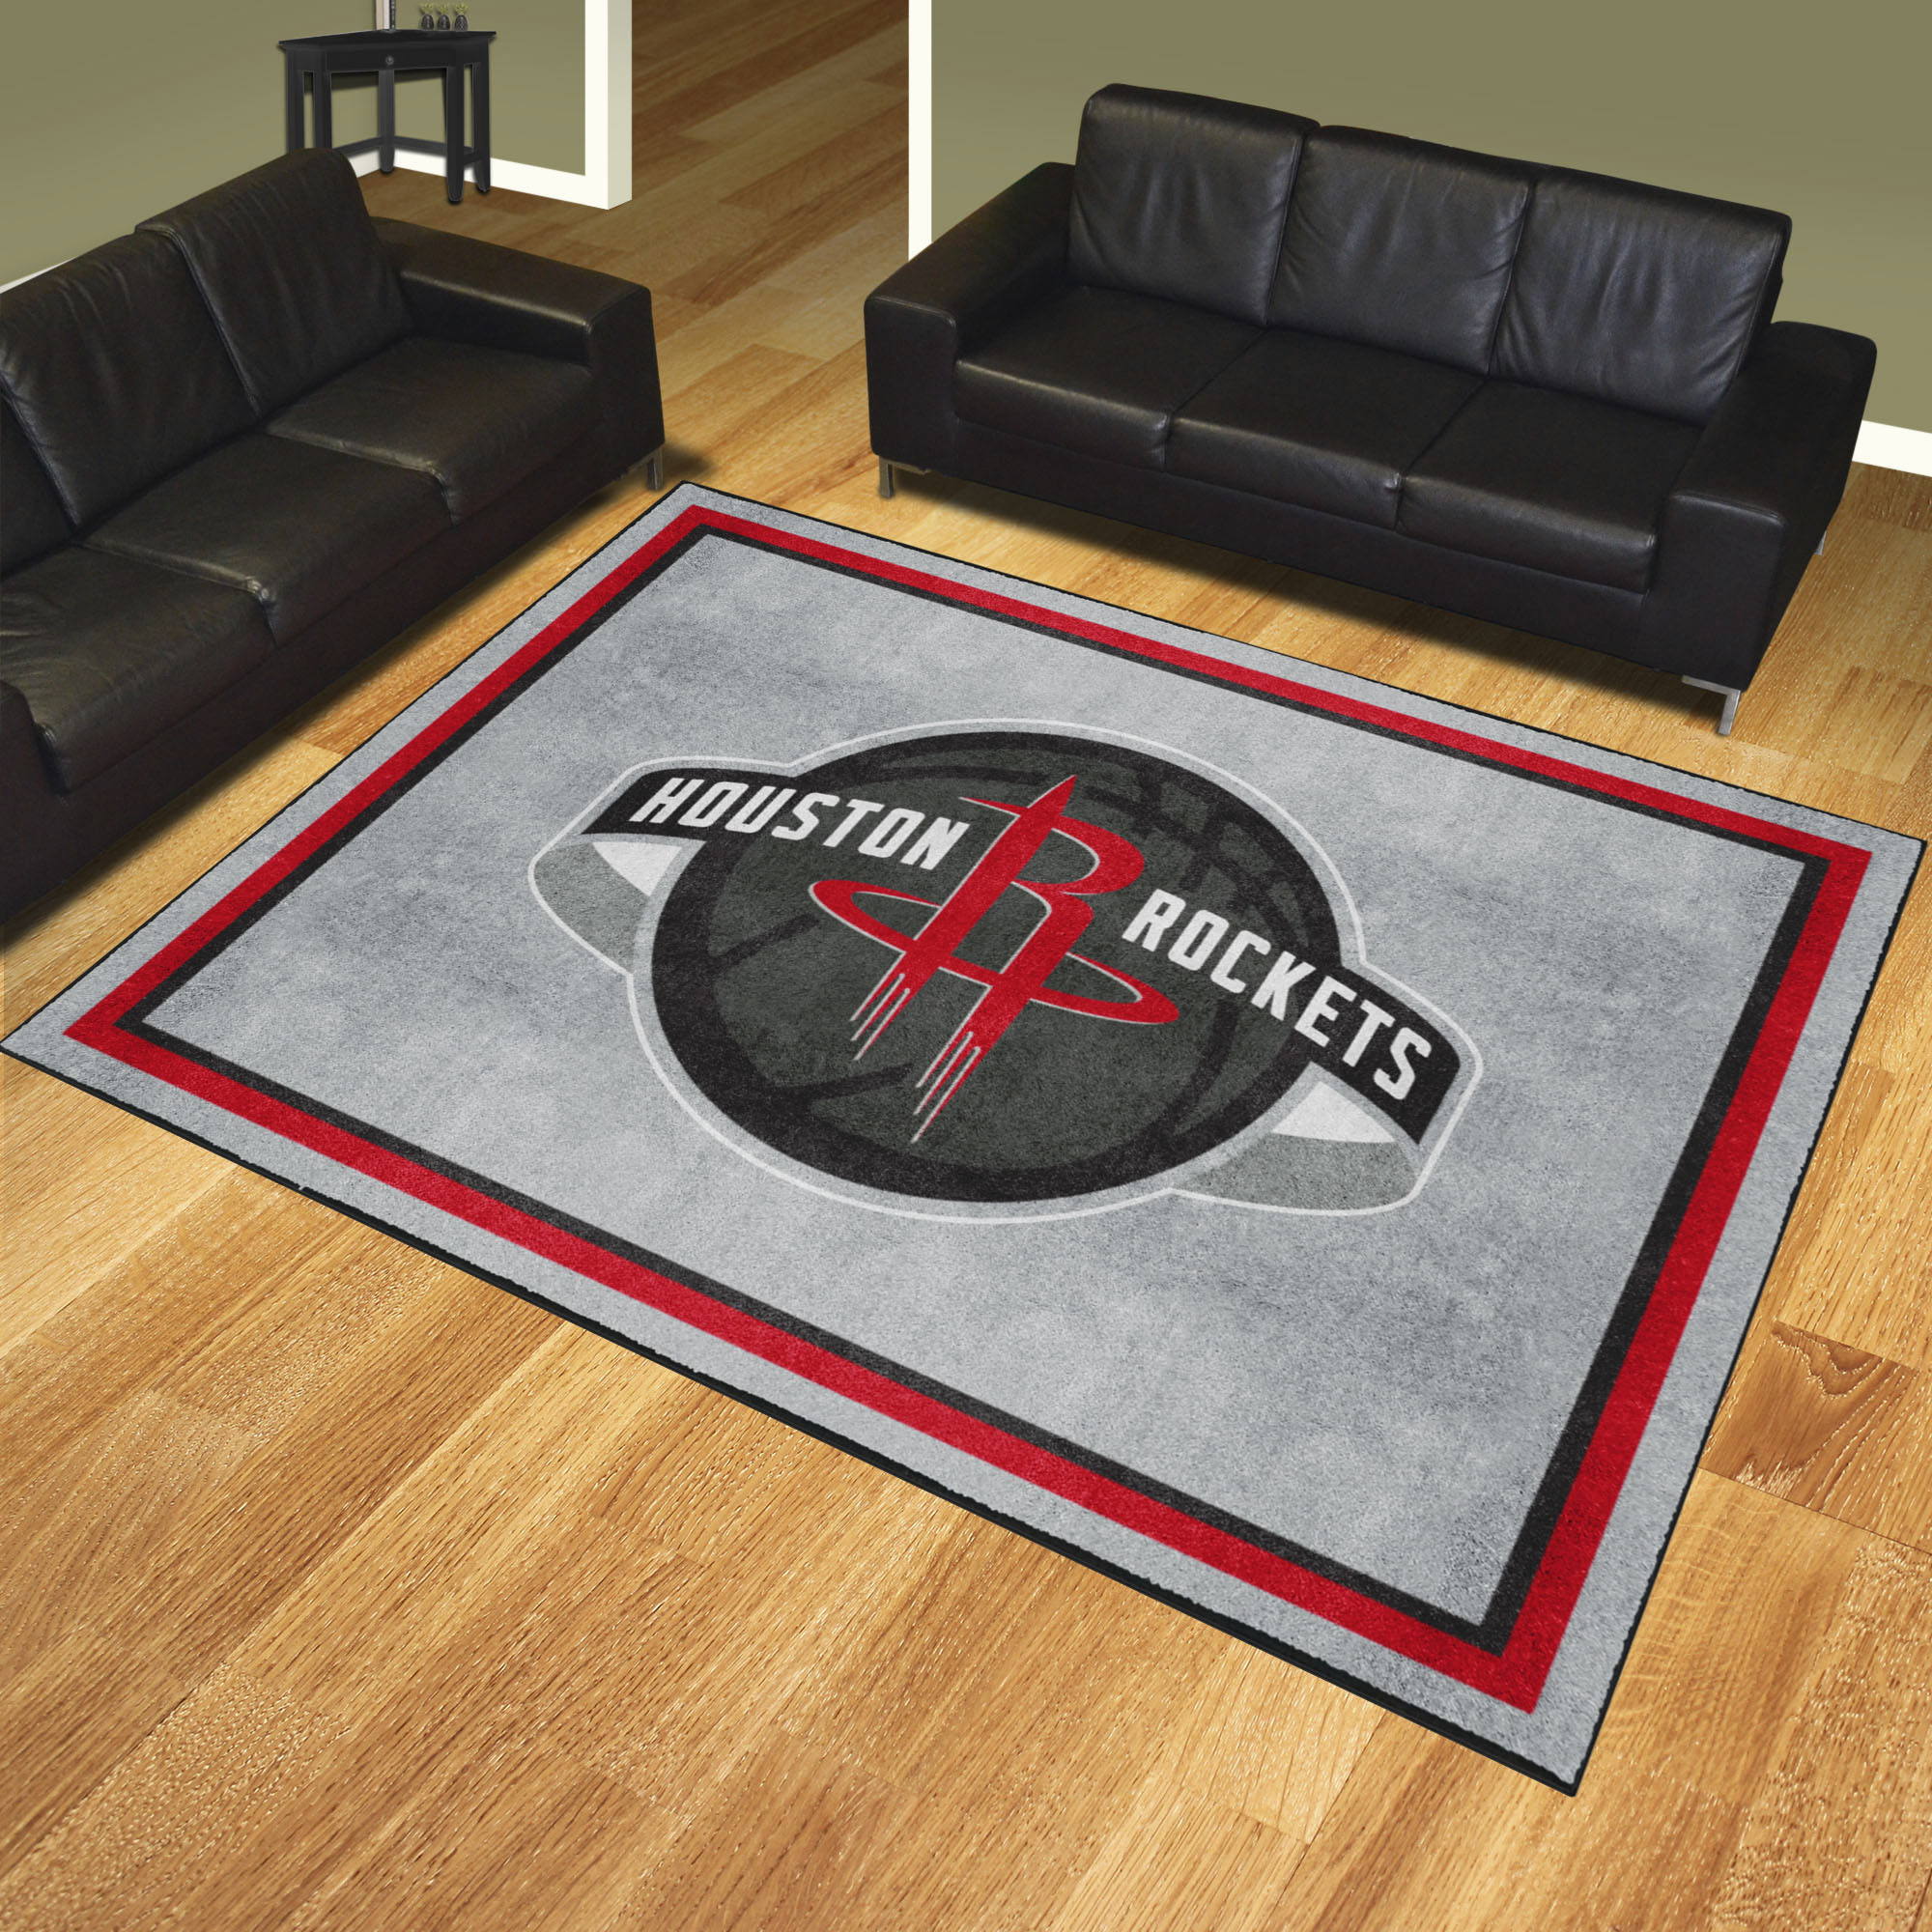 Houston Rockets Area Rug - 8' x 10' Global Logo Nylon